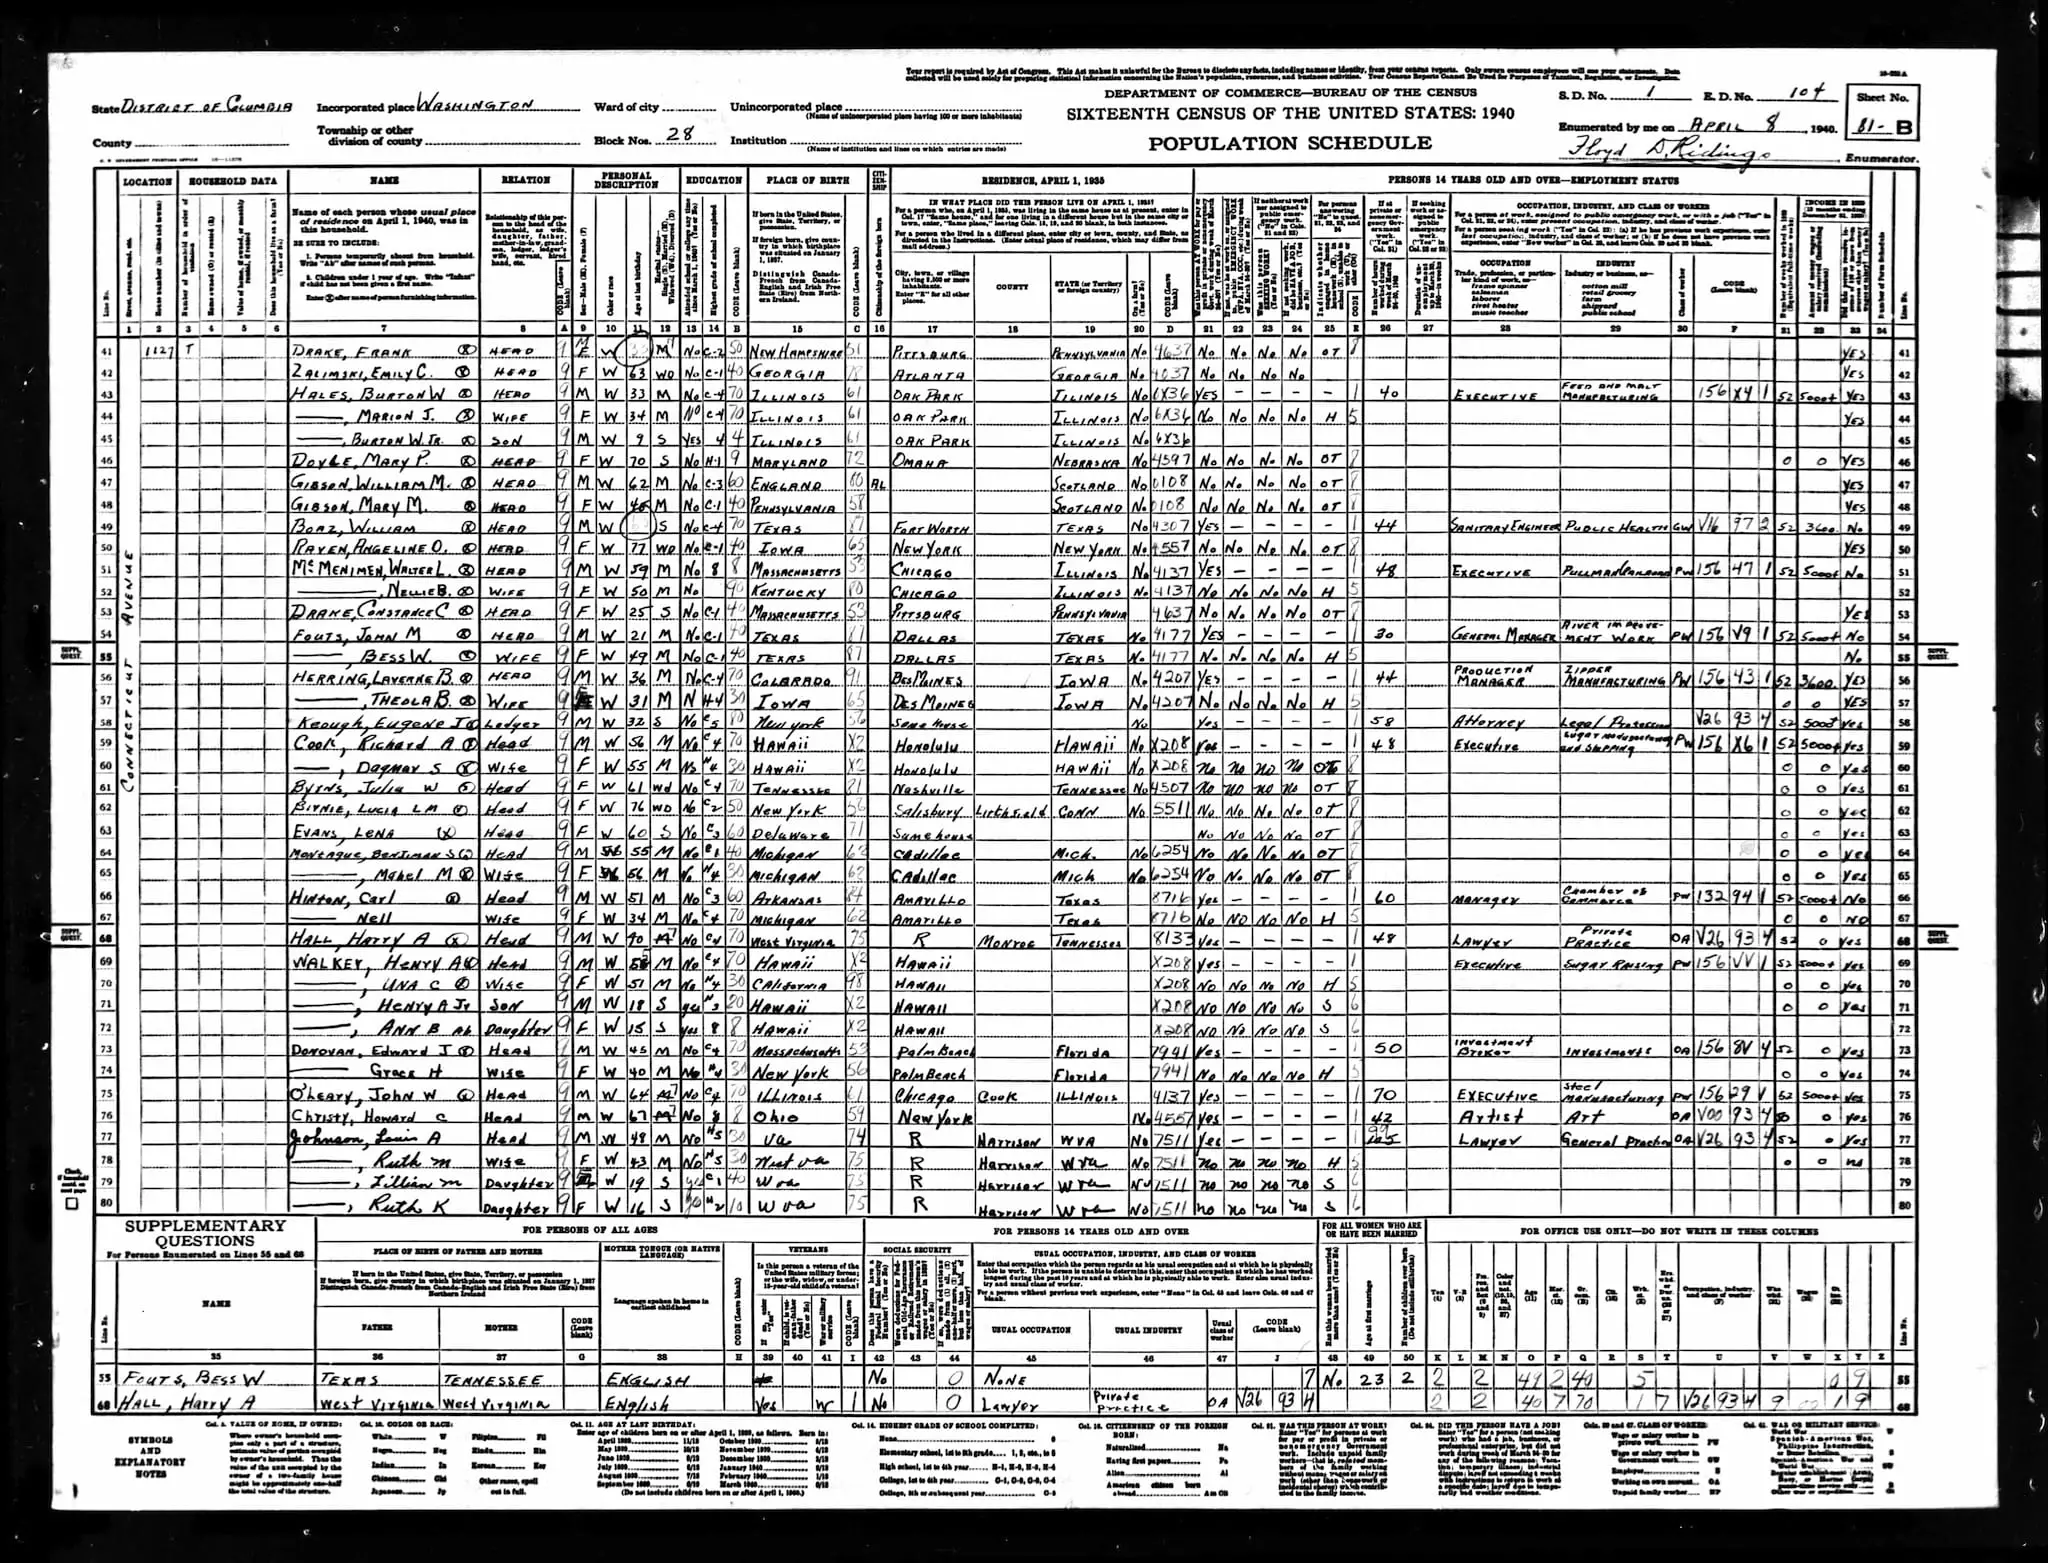 1940 U.S. Census - Mayflower Hotel - pg. 5